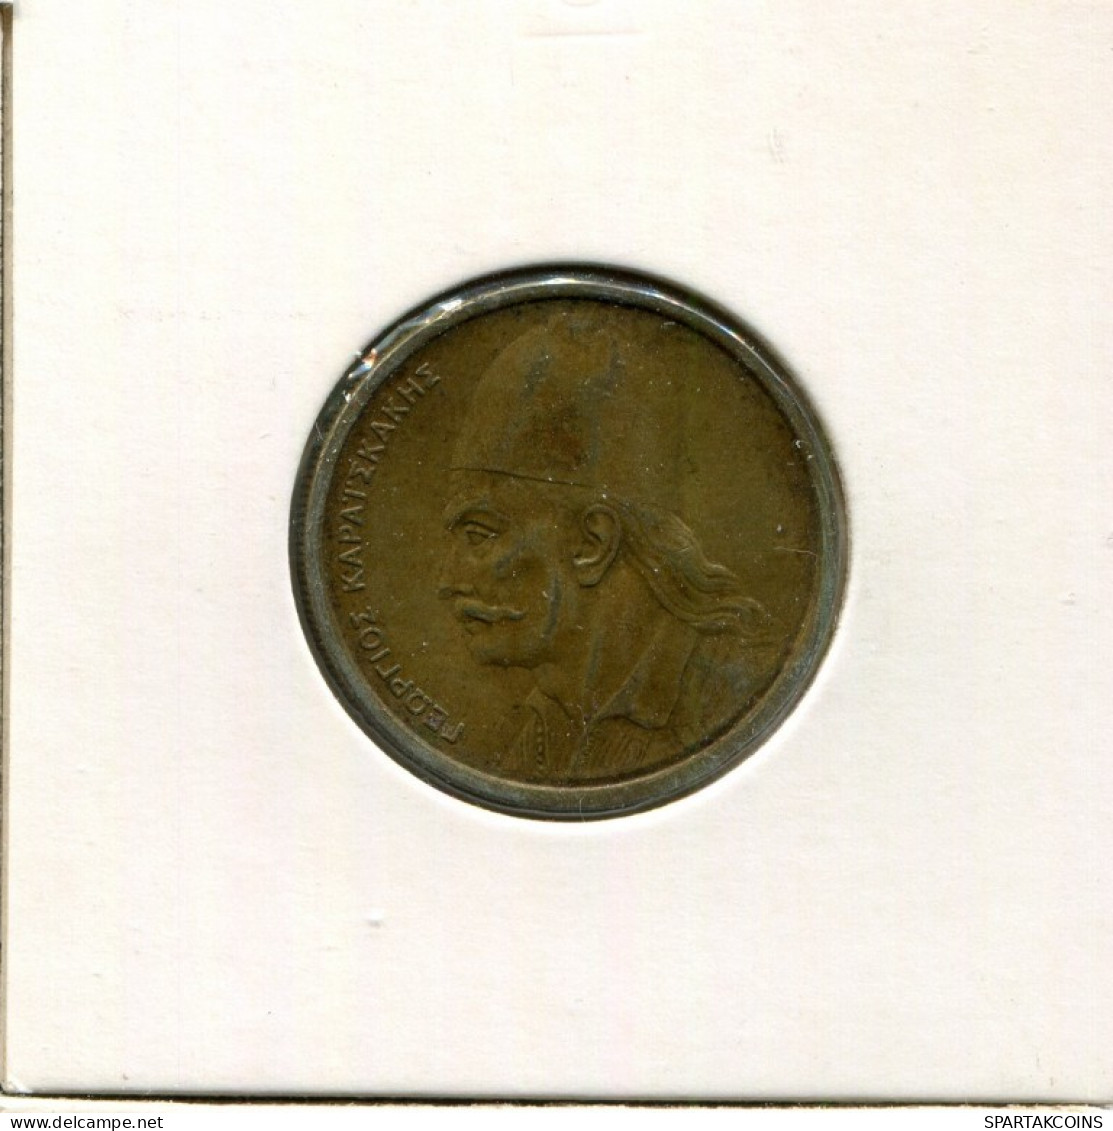 2 DRACHMES 1976 GREECE Coin #AK371.U.A - Griechenland